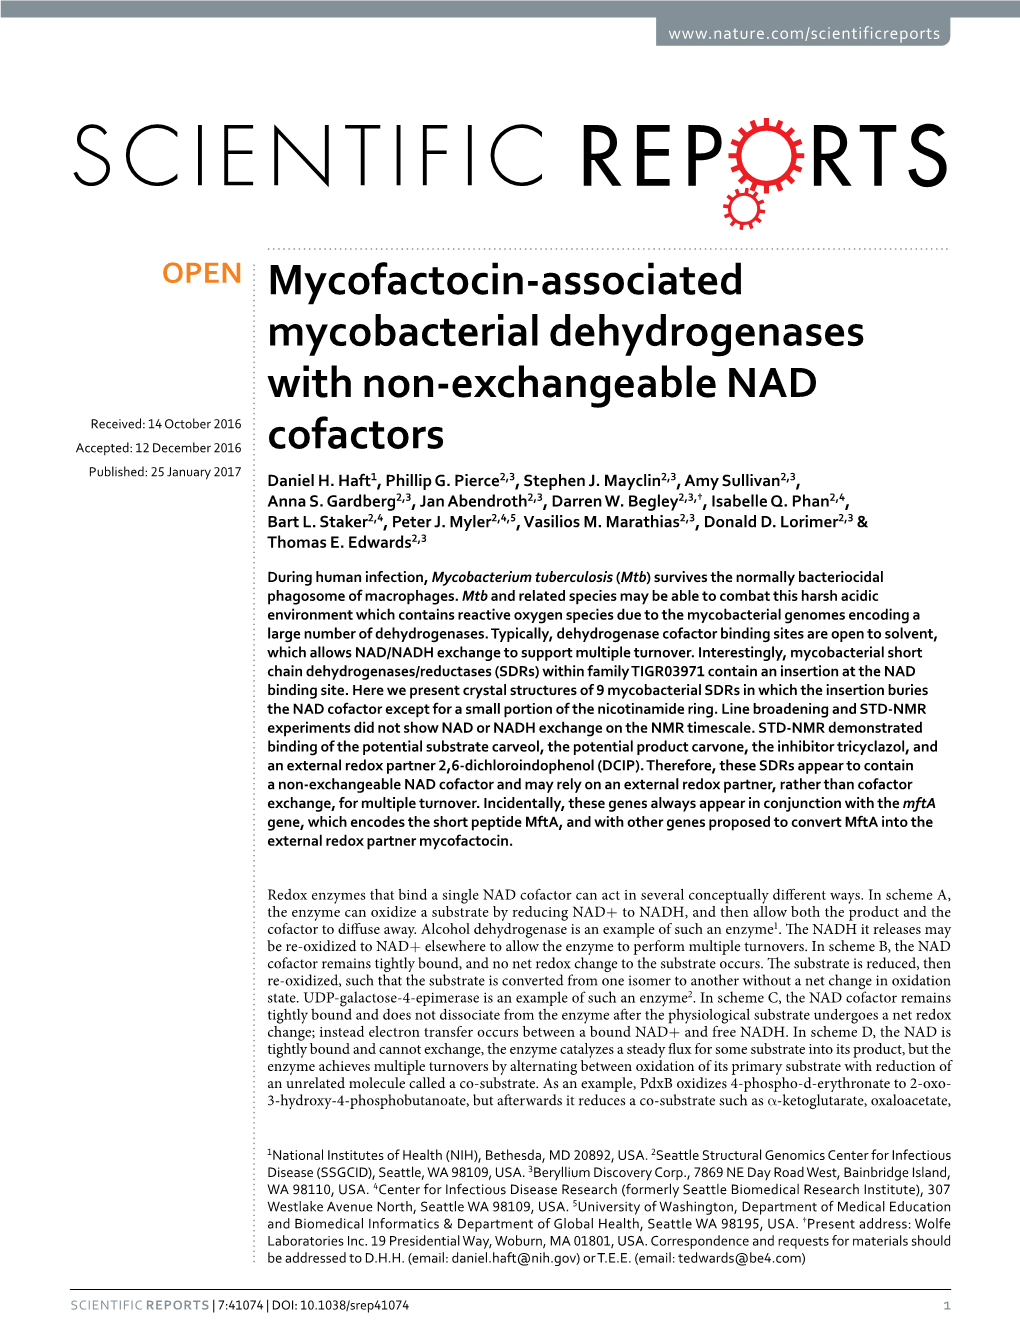 Mycofactocin-Associated Mycobacterial Dehydrogenases with Non-Exchangeable NAD Cofactors